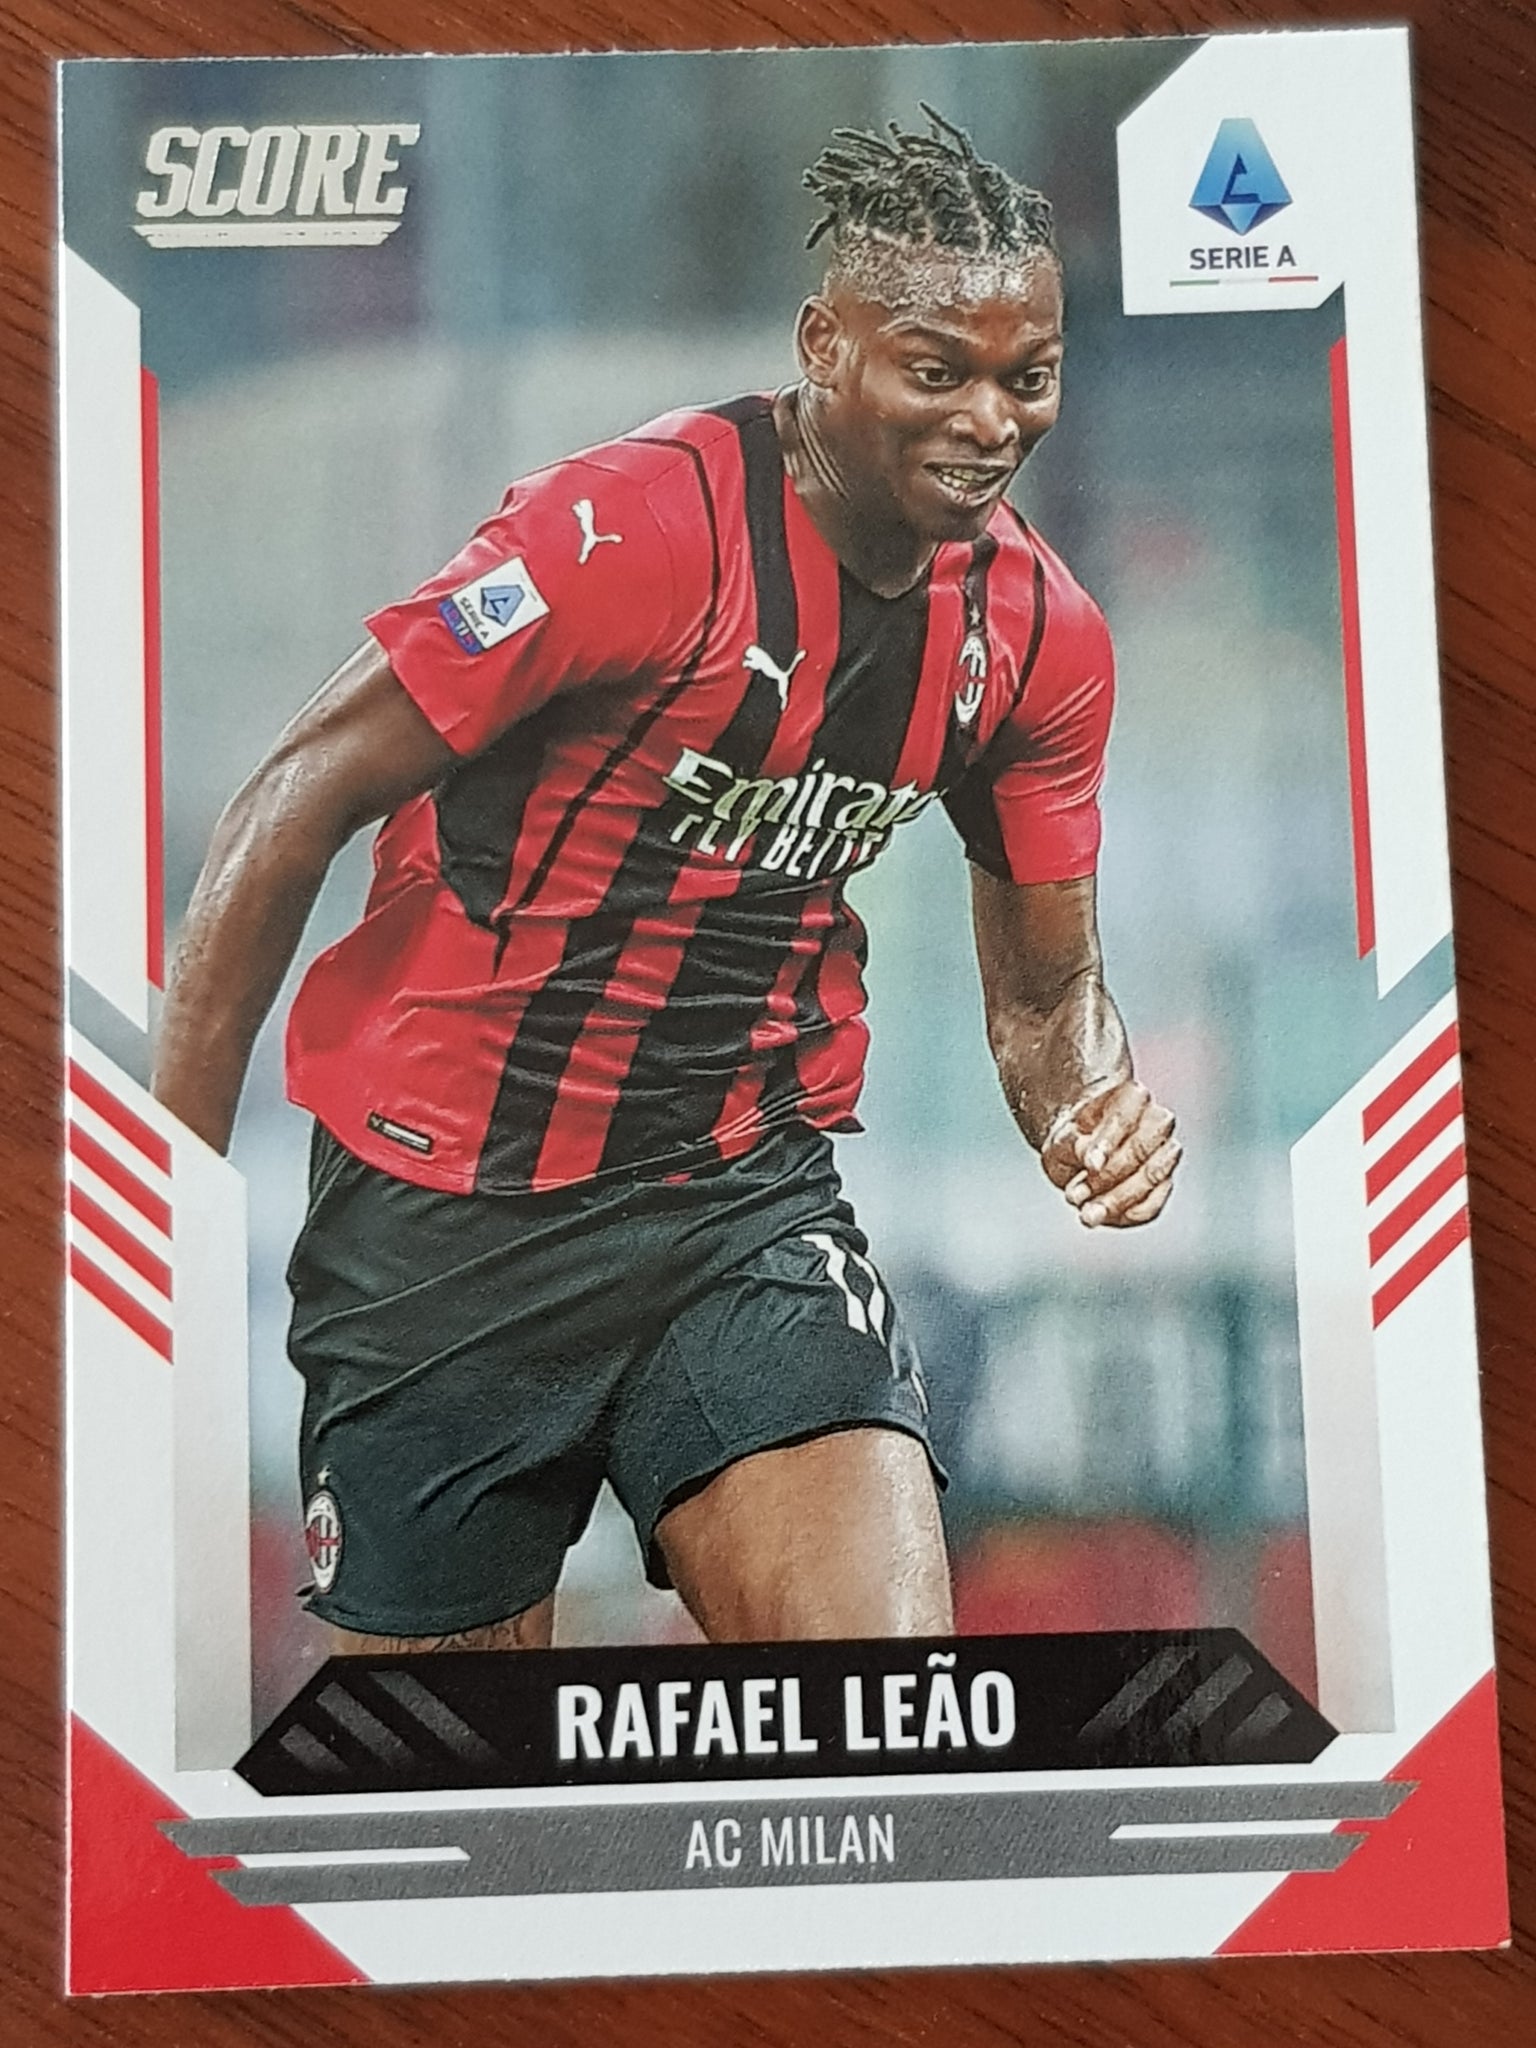 2021-22 Panini Score Serie A Rafael Leão #29 Trading Card